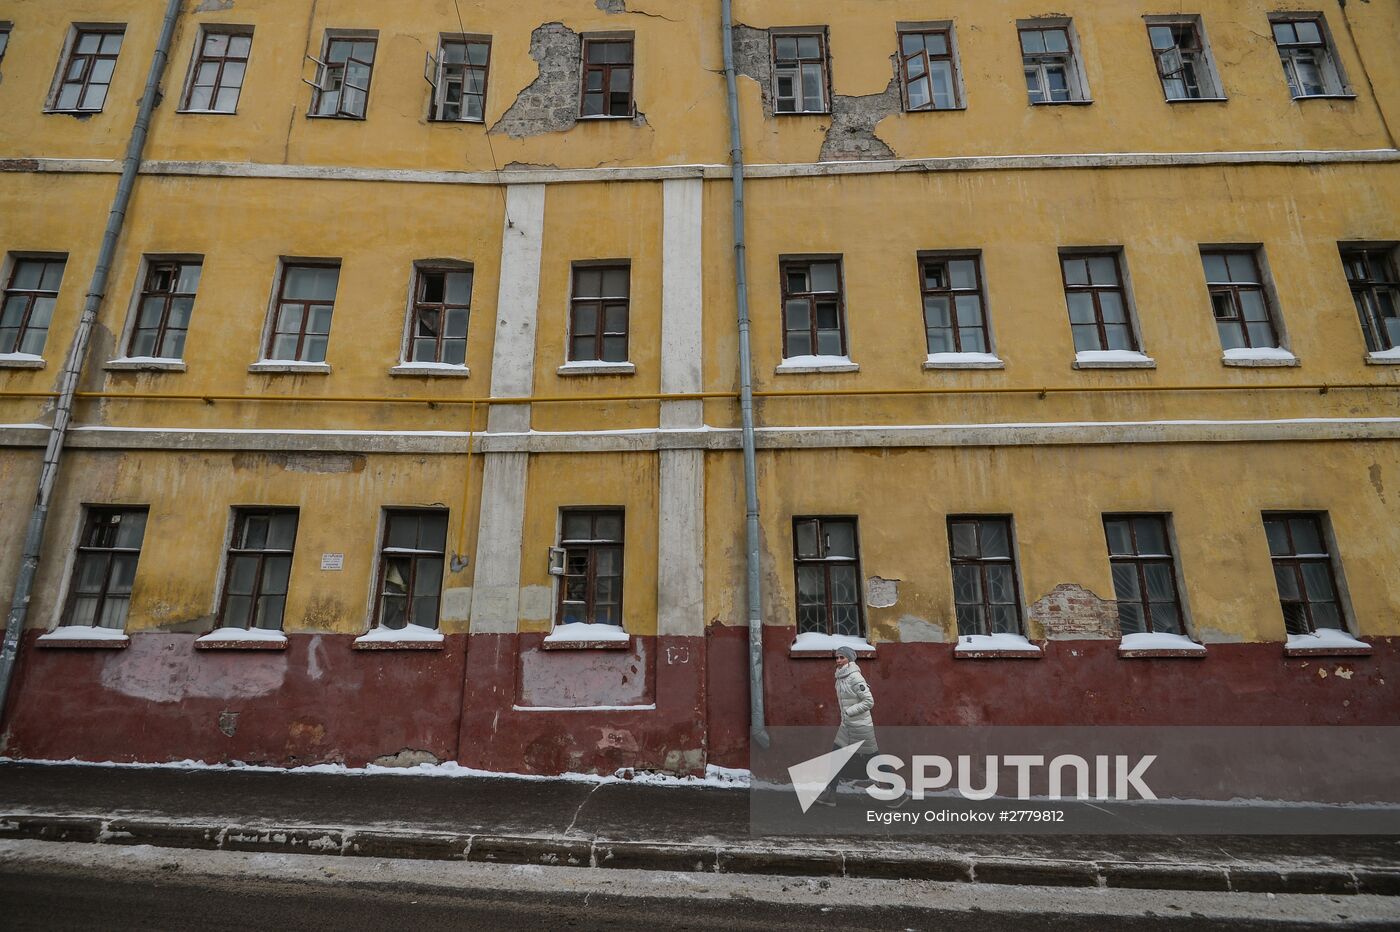 Constructivistic housing quarter "Pogodinskaya"